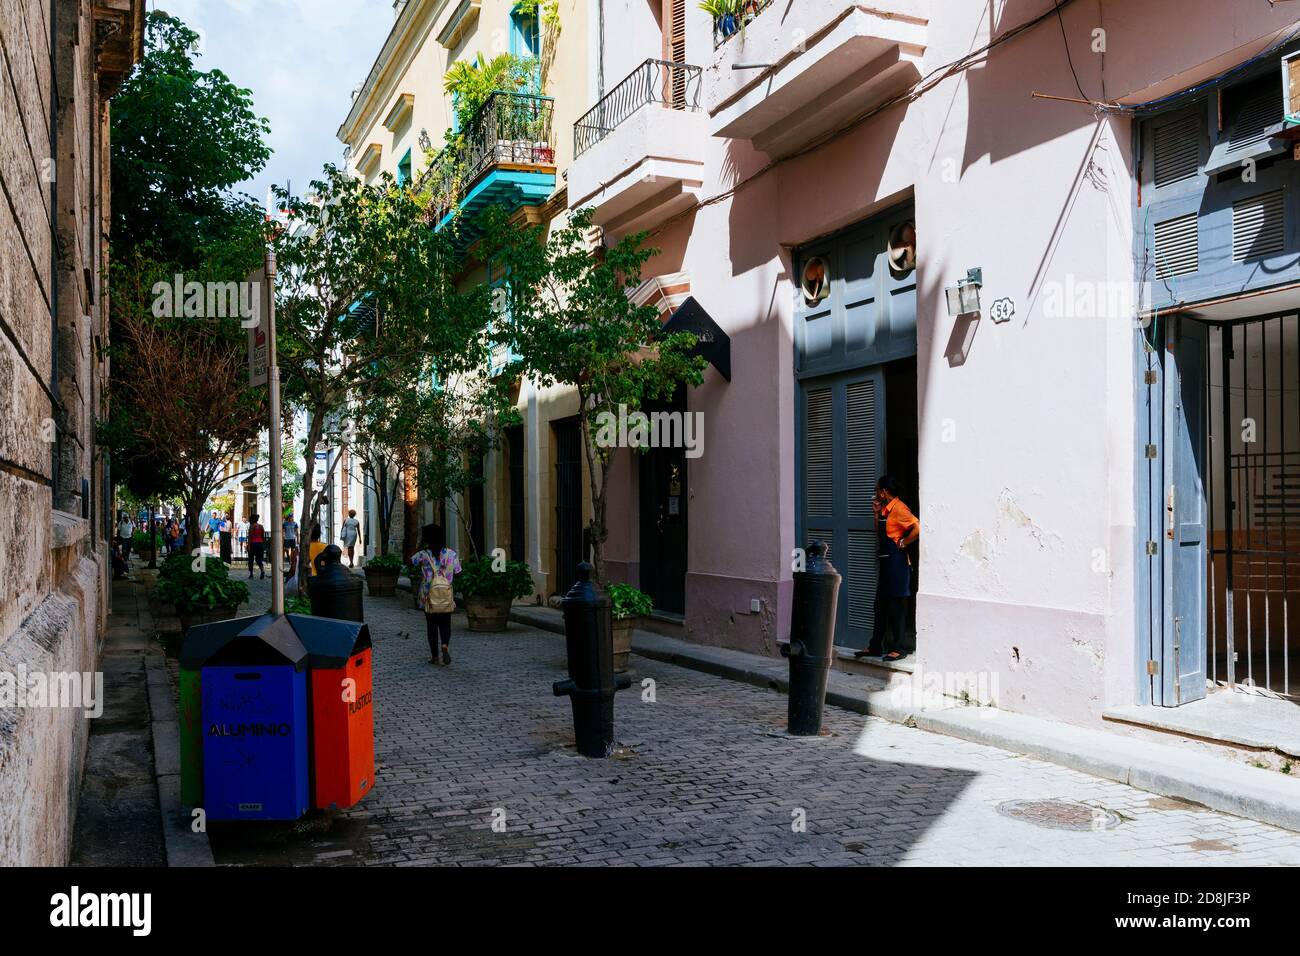 Amargura Street. Kubanische lokale Atmosphäre in einer beliebten Straße. La Habana - La Havanna, Kuba, Lateinamerika und die Karibik Stockfoto